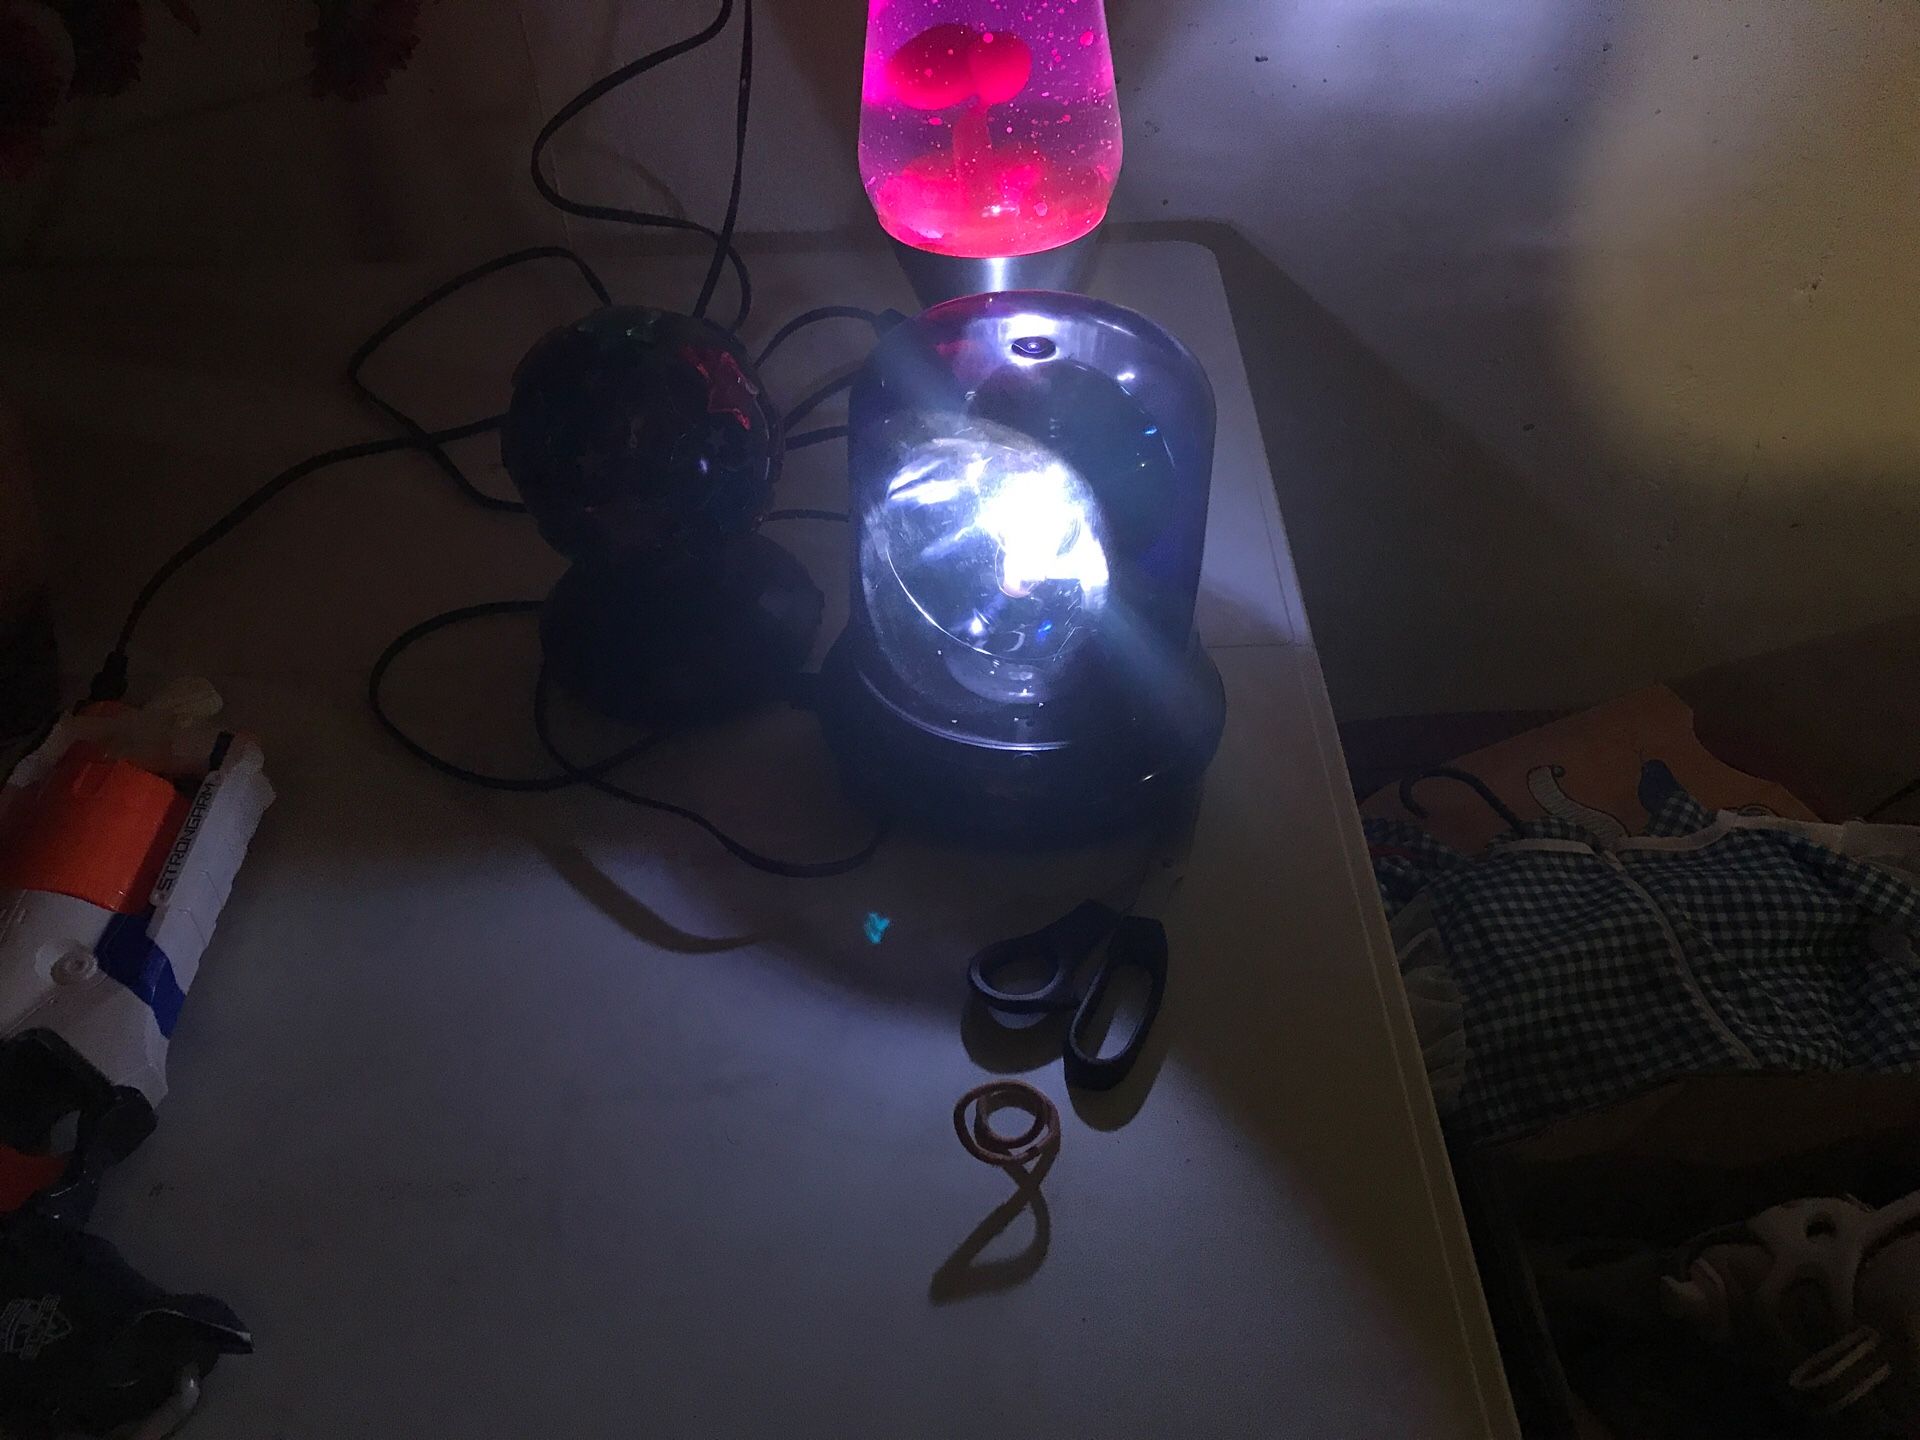 Rotating lights and lava lamp